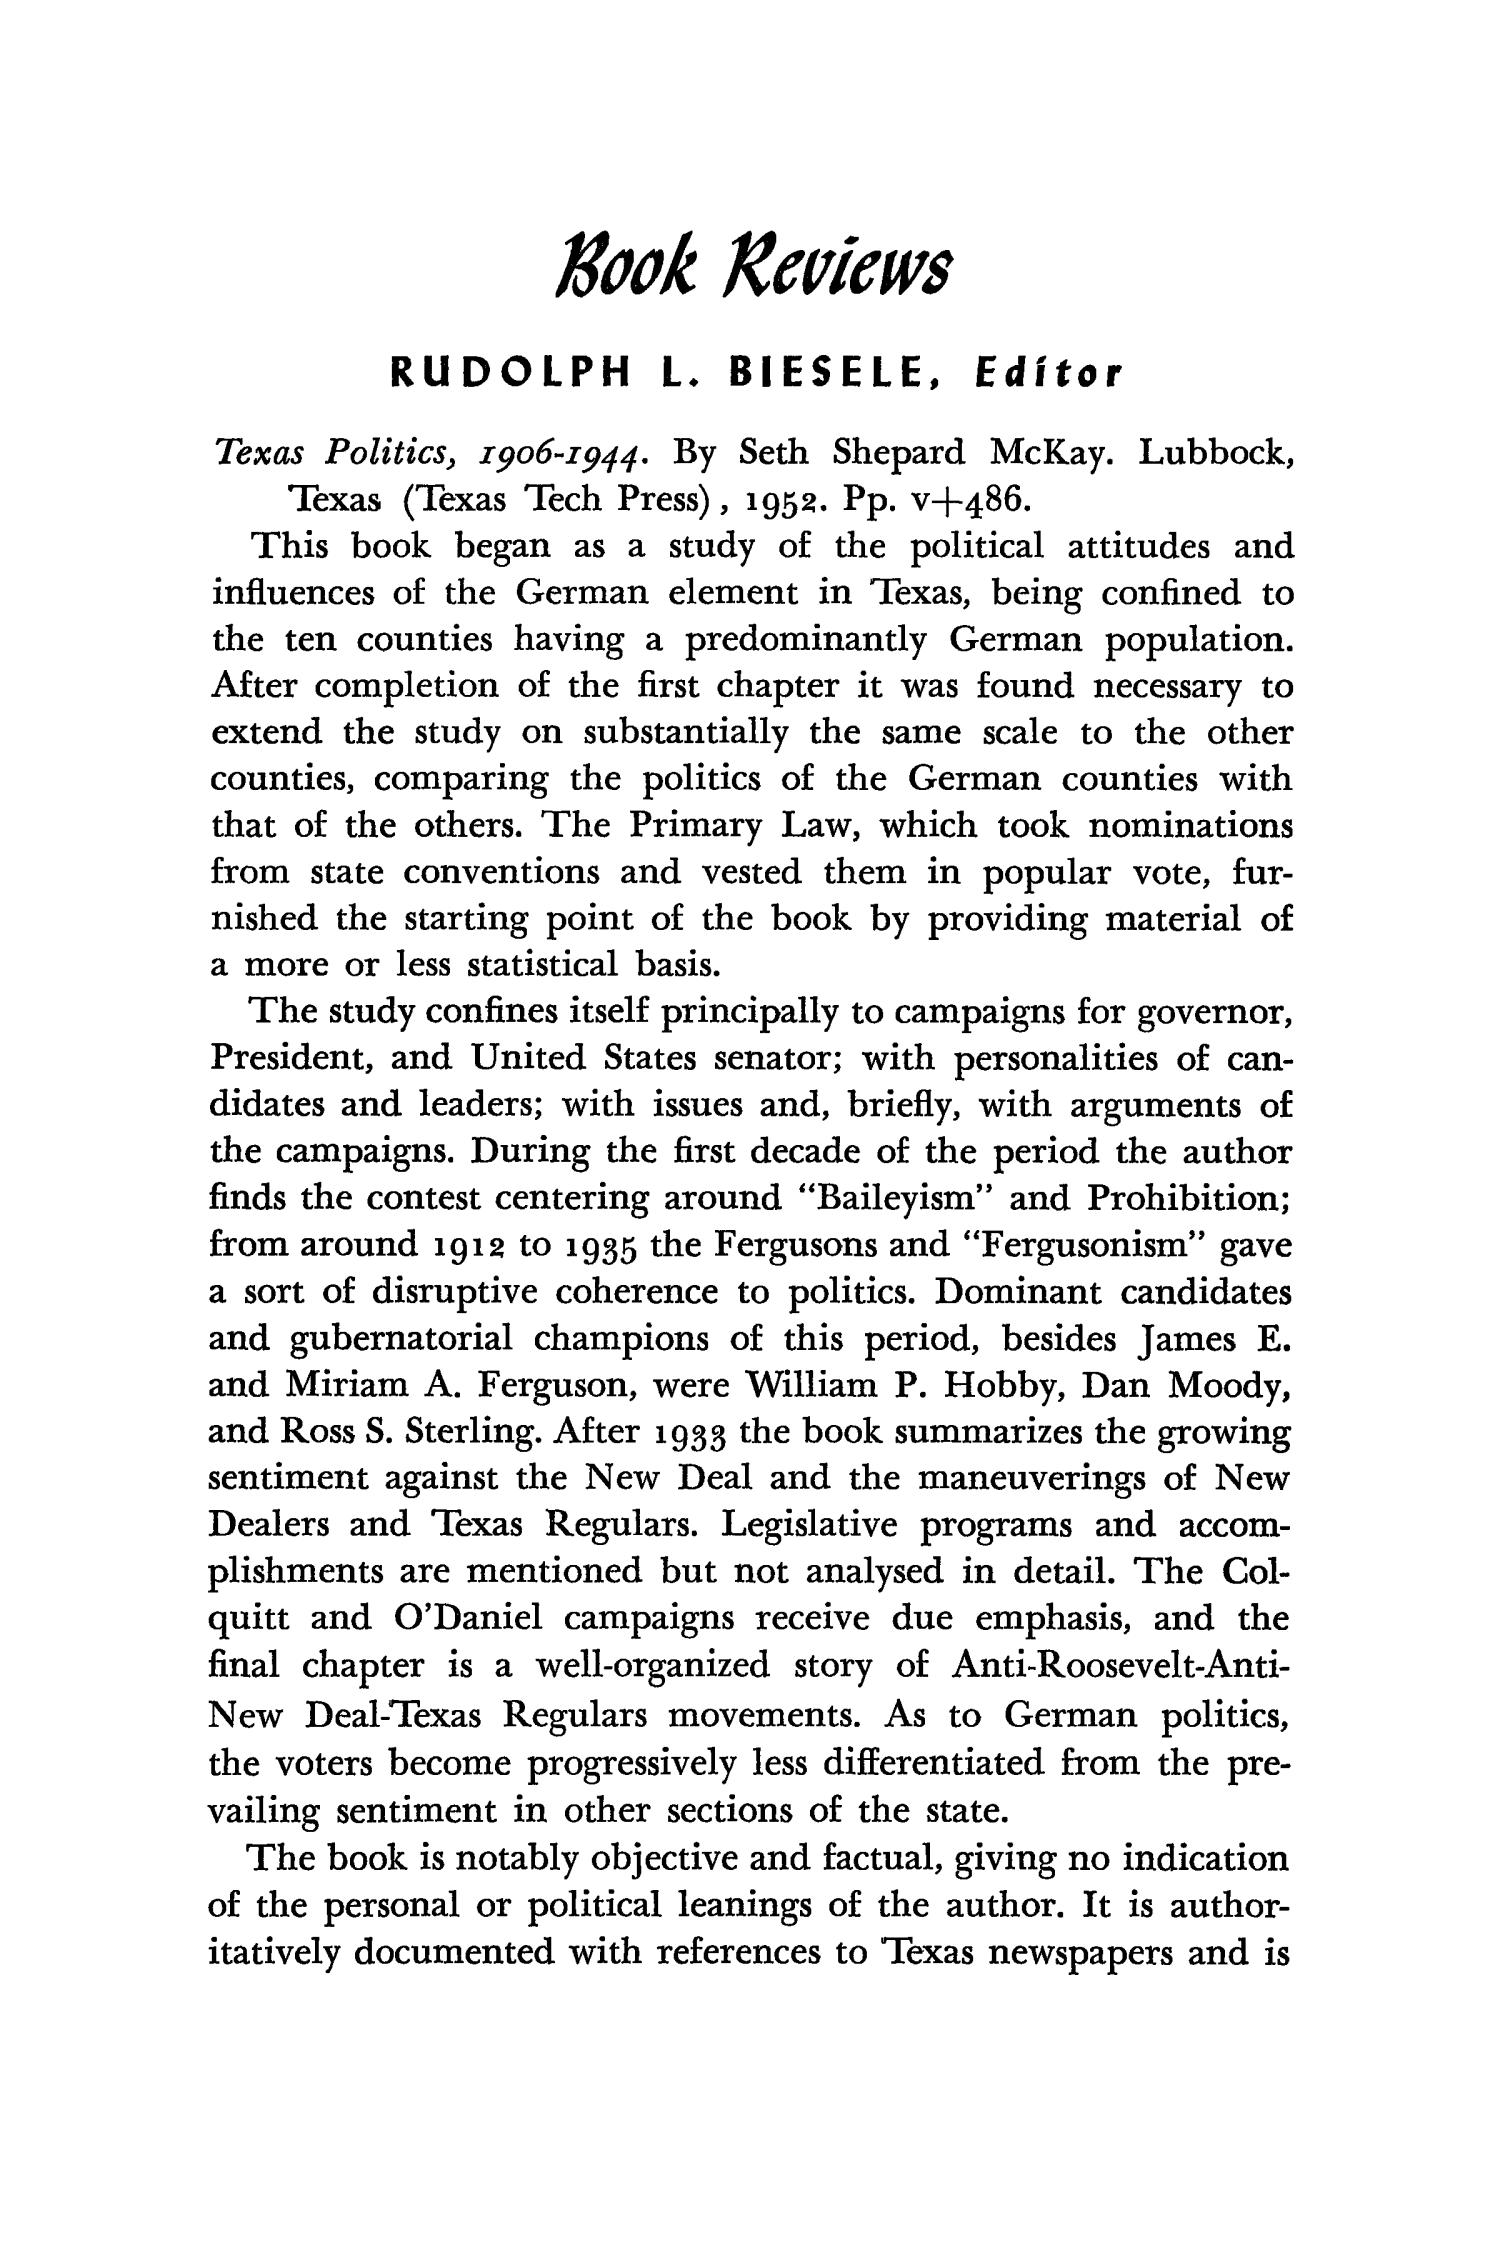 The Southwestern Historical Quarterly, Volume 56, July 1952 - April, 1953
                                                
                                                    150
                                                